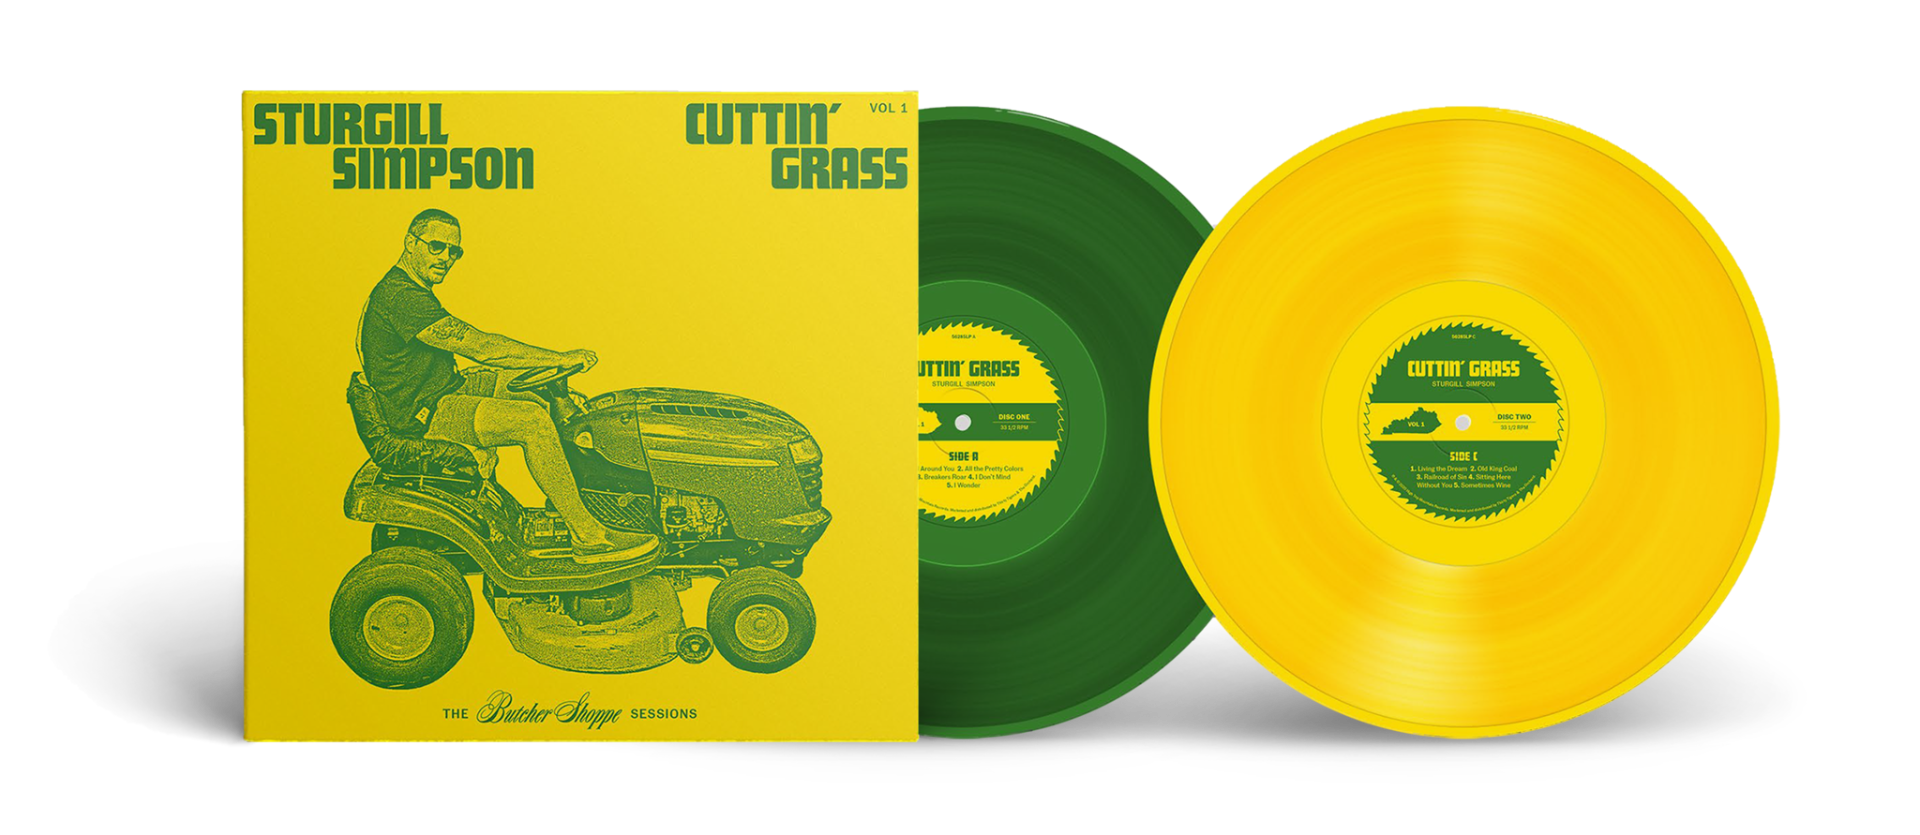 Sturgill Simpson Cuttin' Grass - Vol. 1 Vinyl